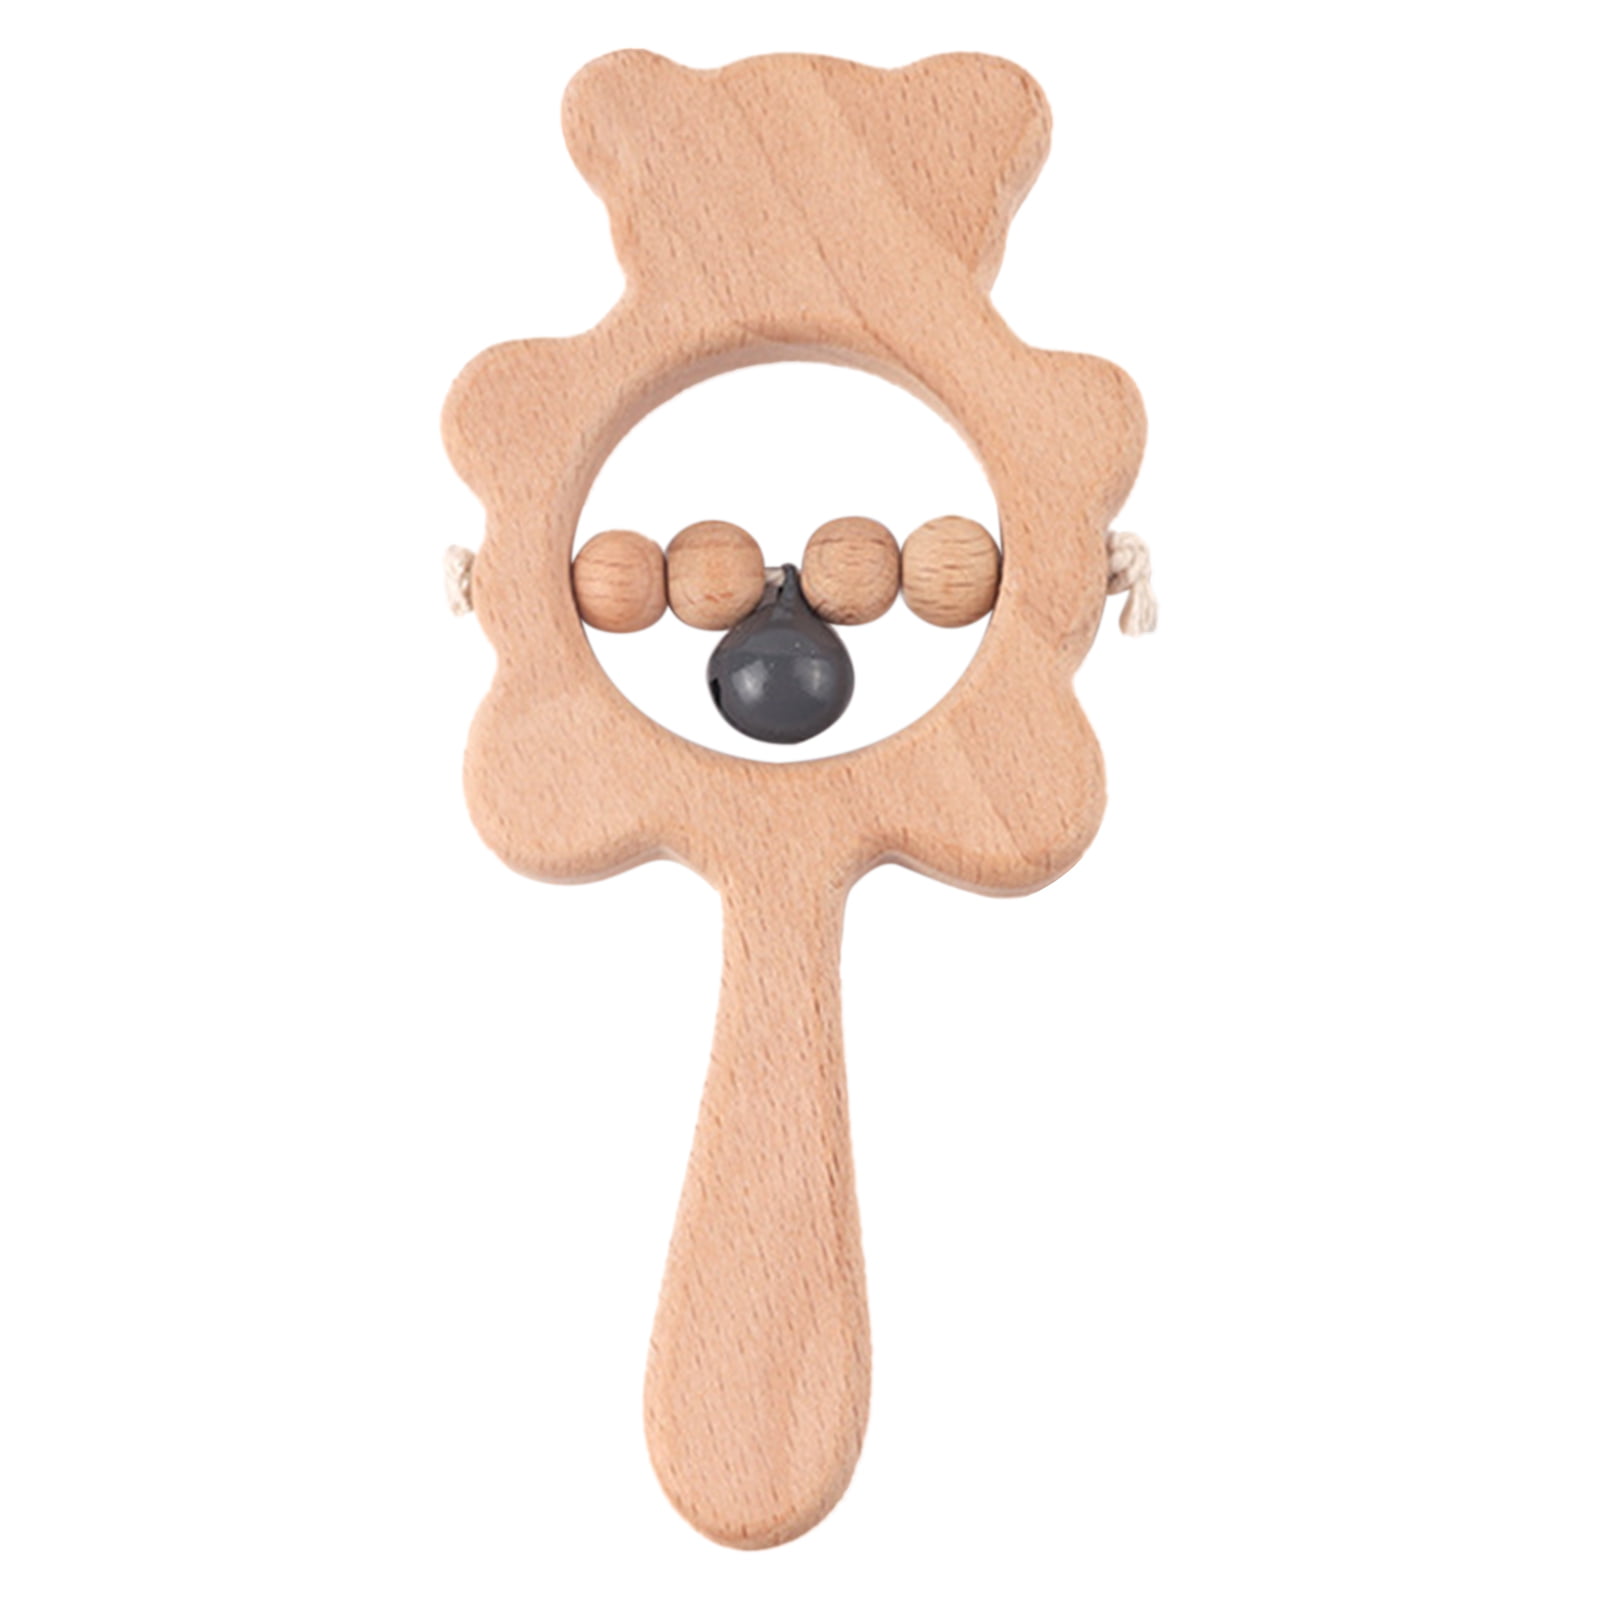 Wood Teether Ring Baby Montessori Developmental Teething Grasping Infant Toy 